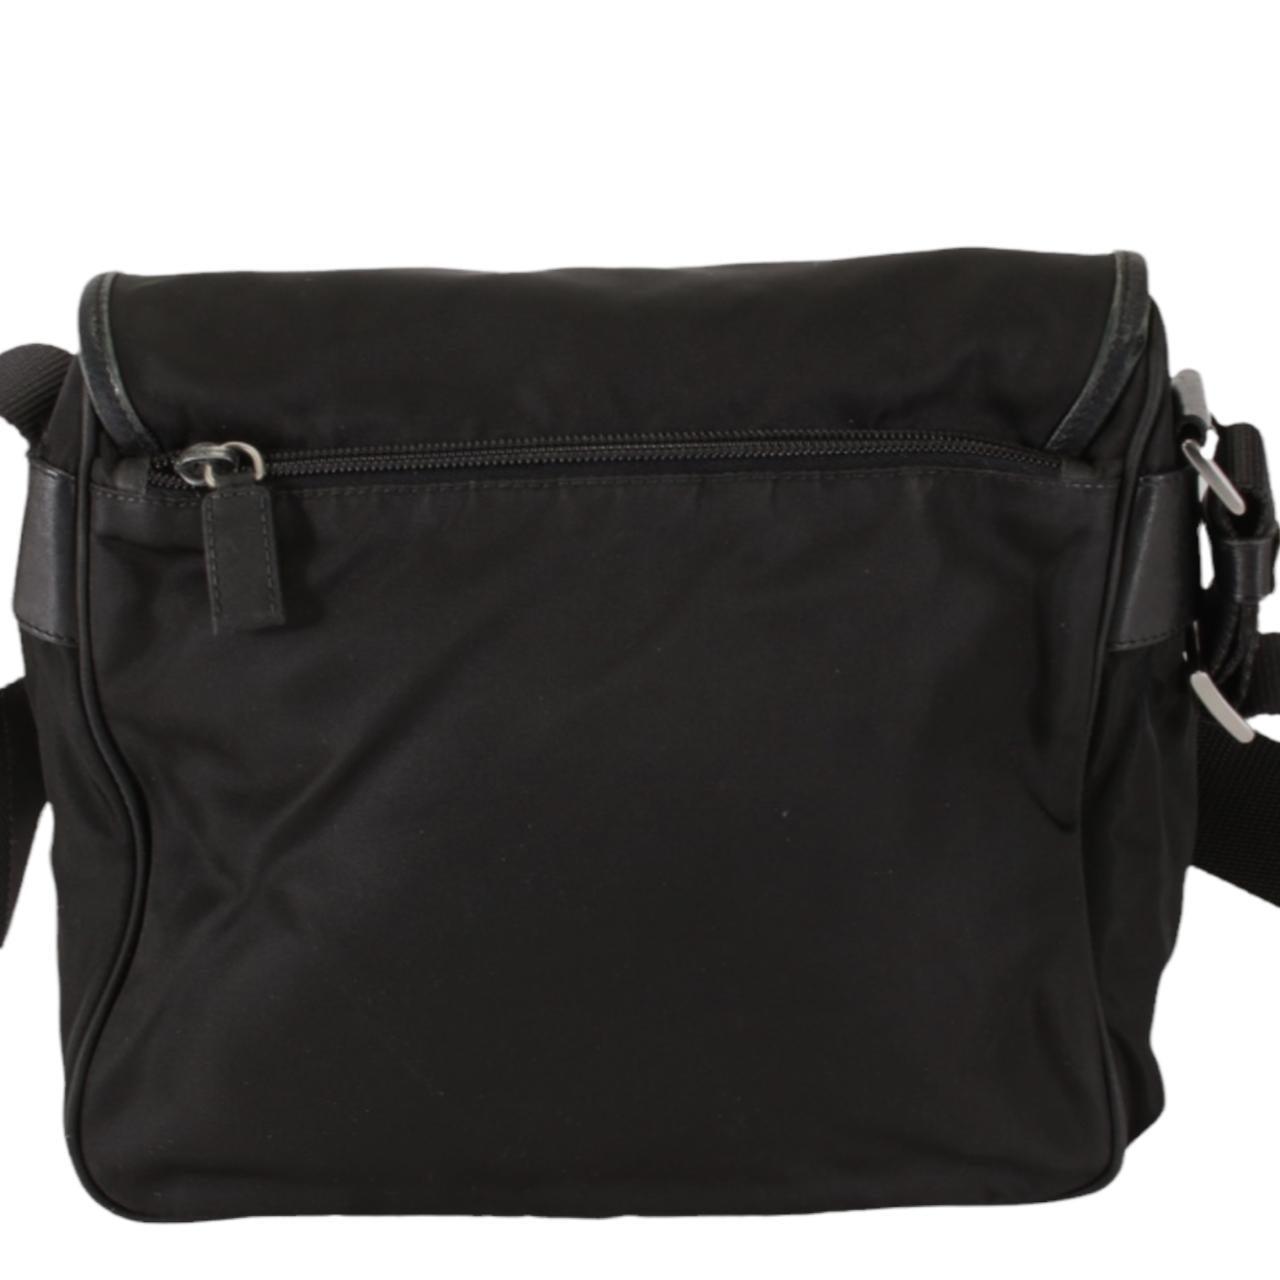 Authentic Prada Buckle nylon Black Shoulder Bag - Known Source